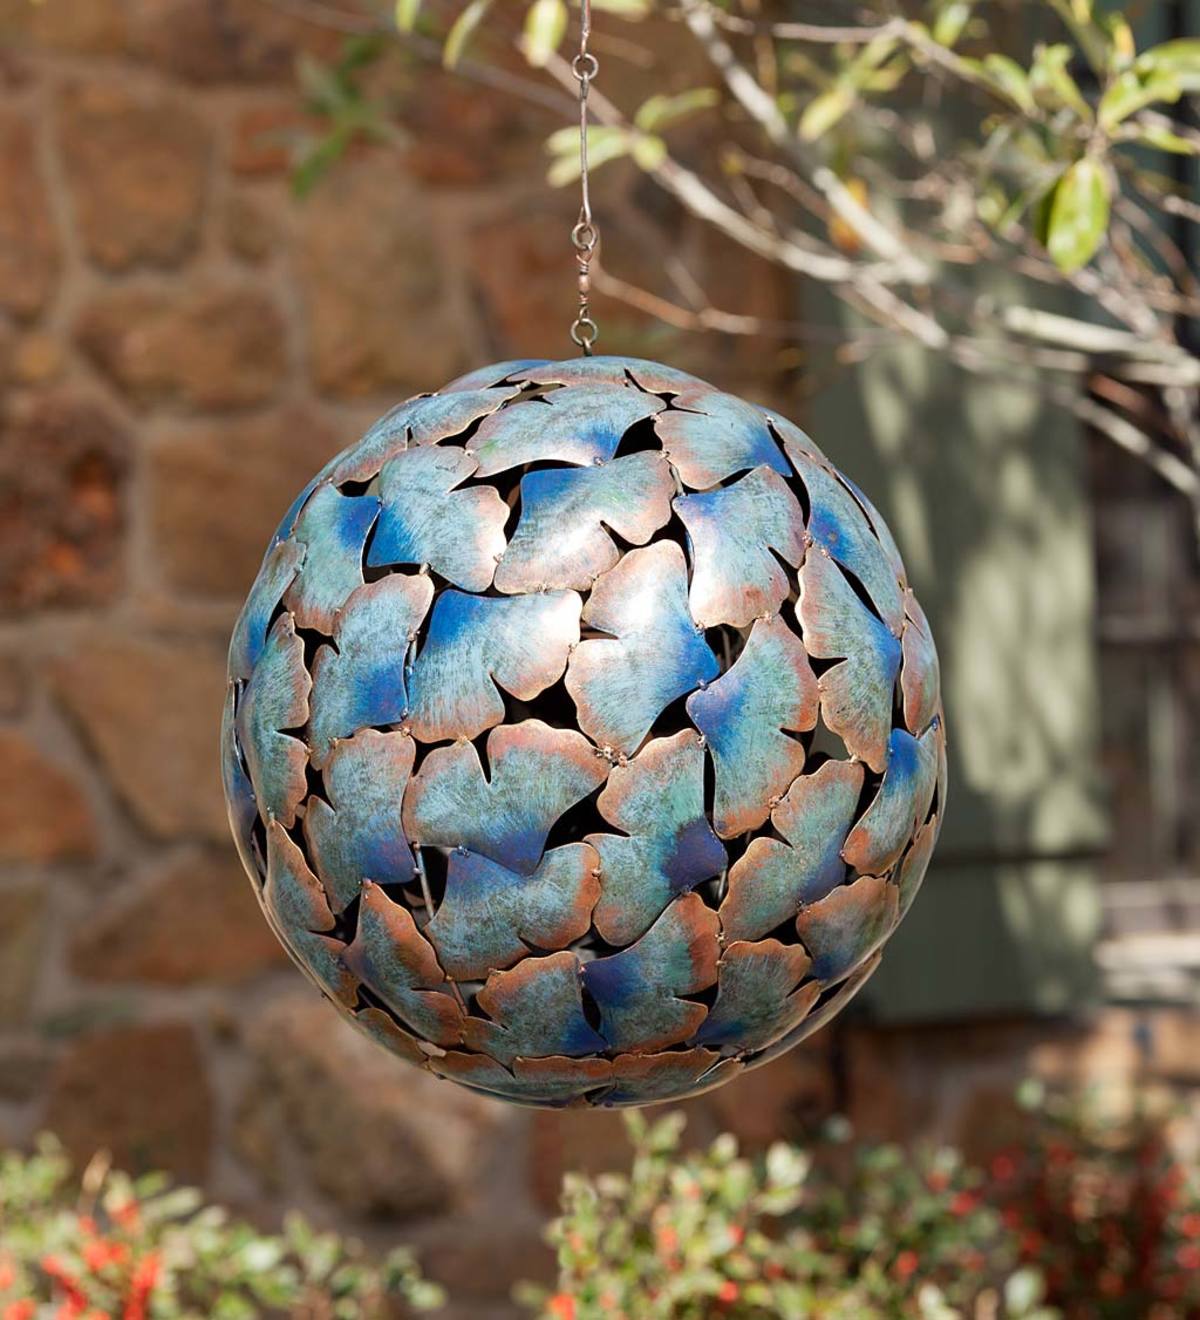 Hanging Metal Ginkgo Leaf Globe Lantern